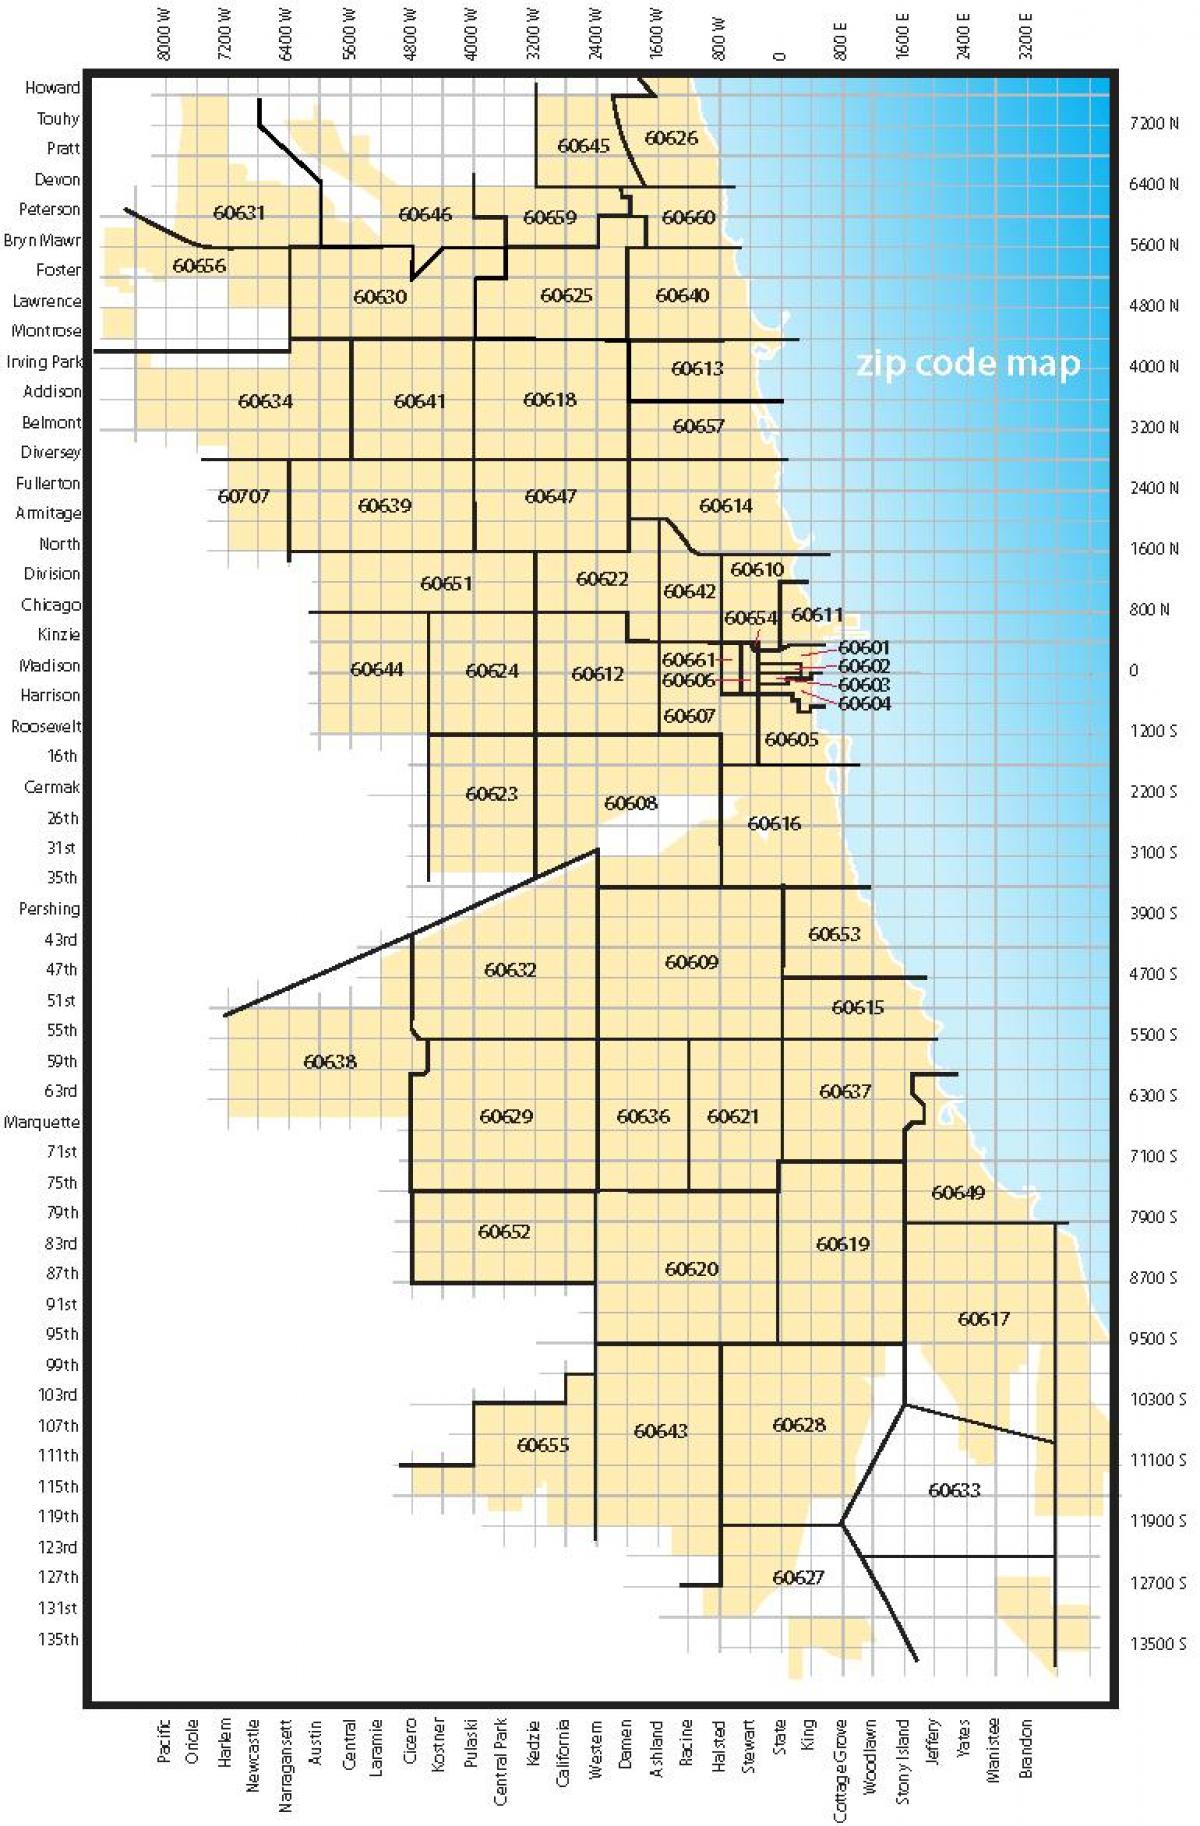 خريطة شيكاغو رموز البريدي